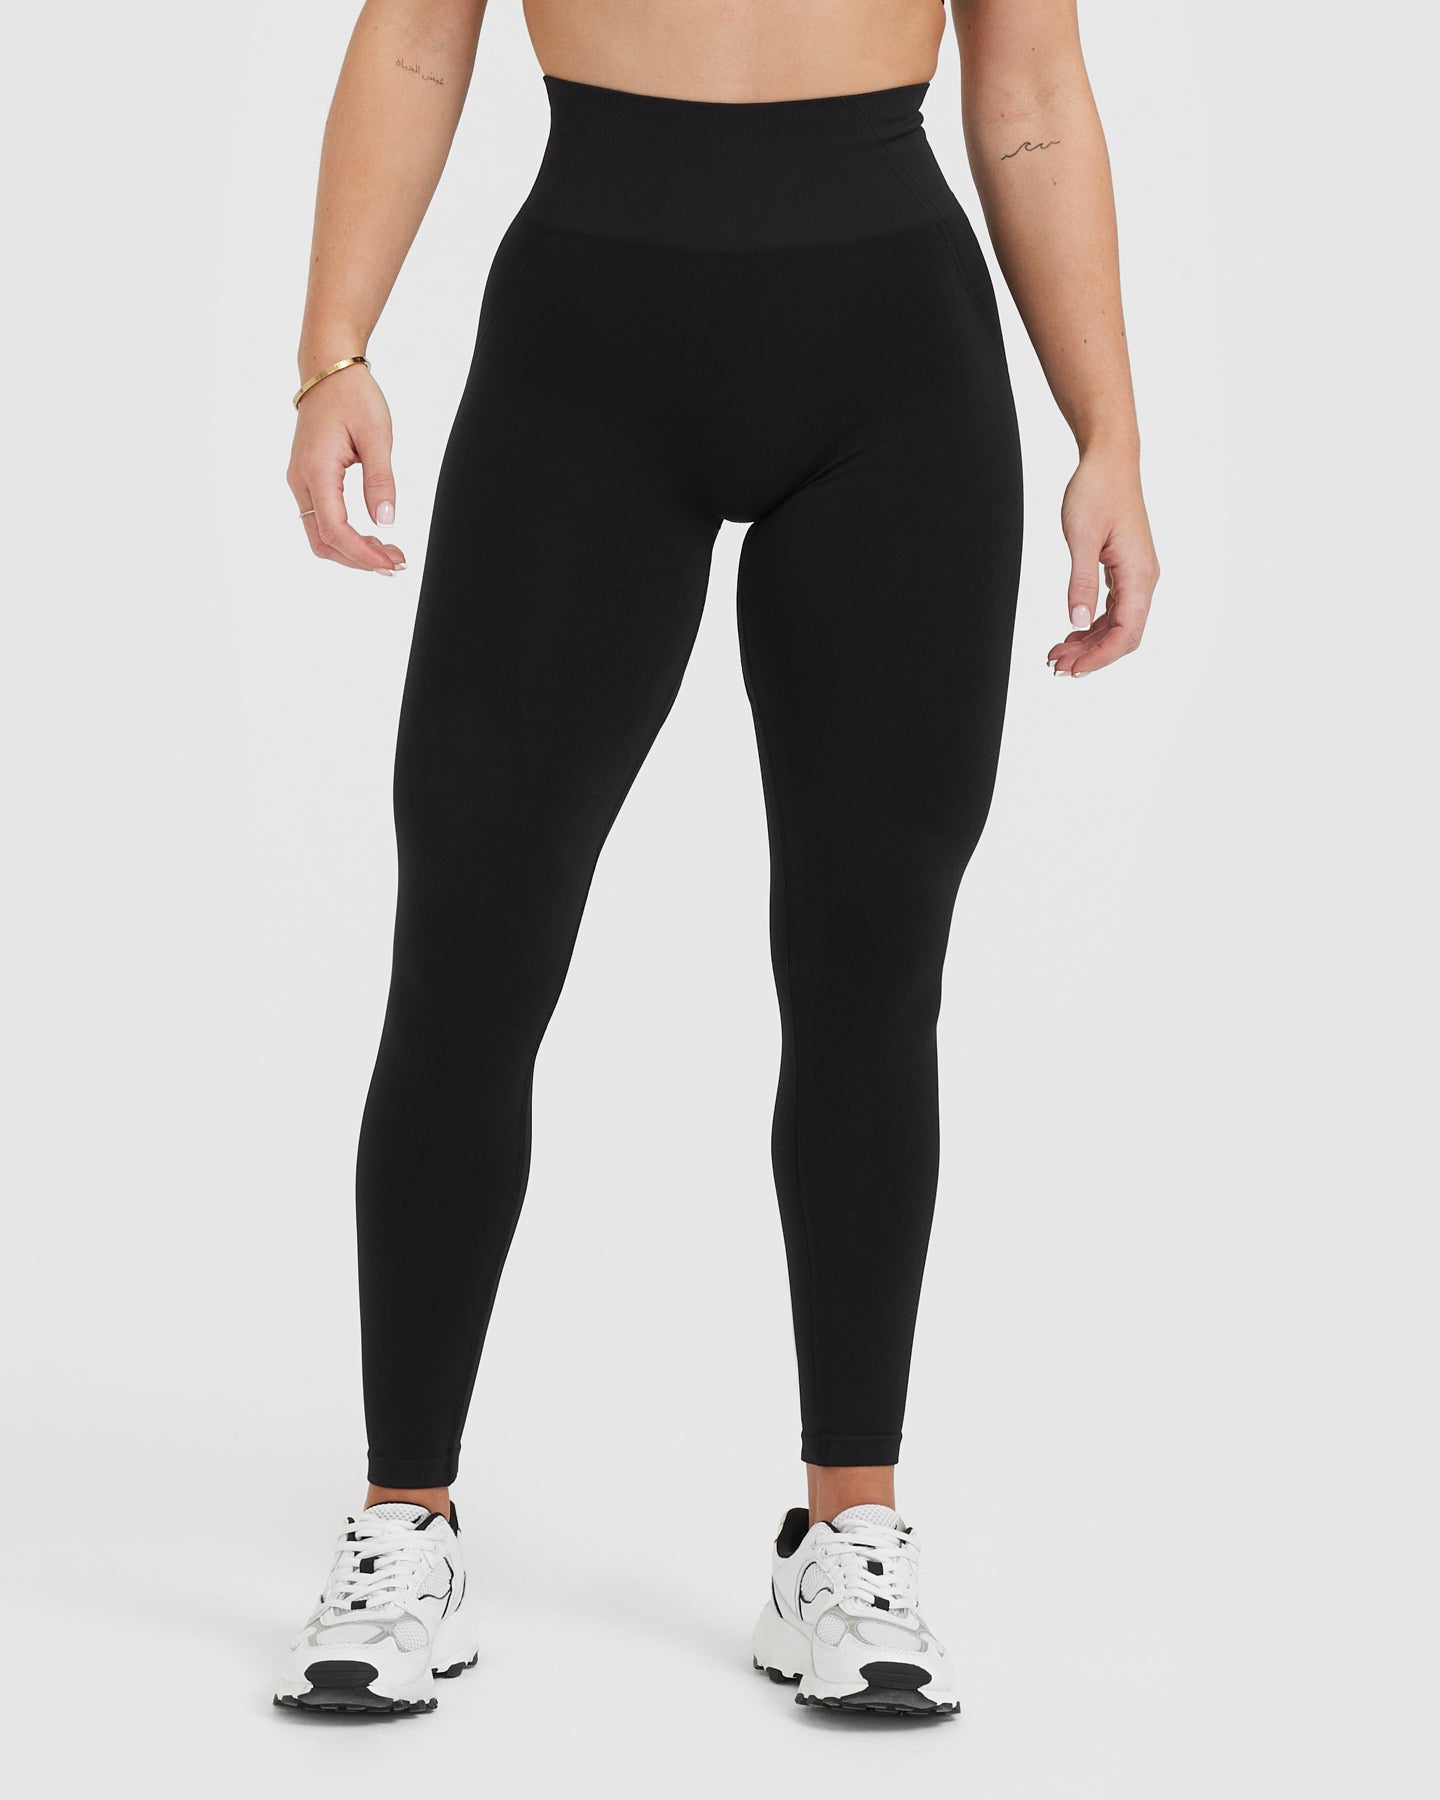 Gymshark Small Black Women's Gym Boxer Shorts : r/gym_apparel_for_women